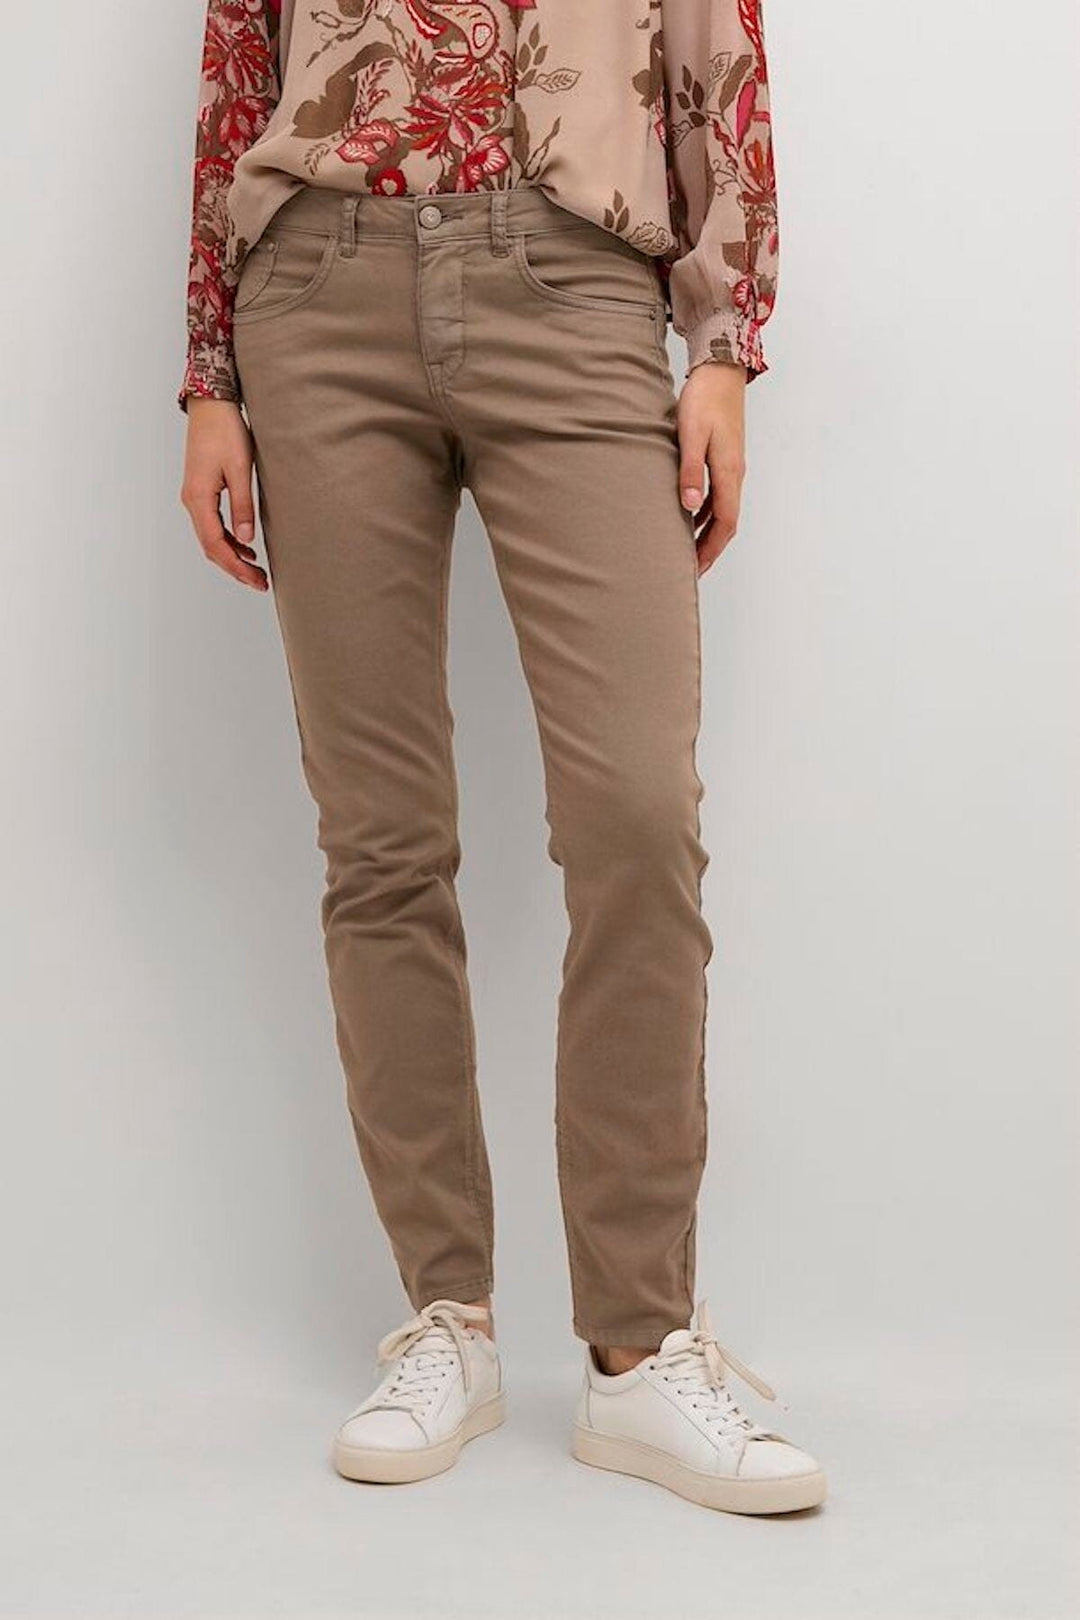 Pantalon style jean étroit Femme - Bas - Pantalon - Jeans Cream